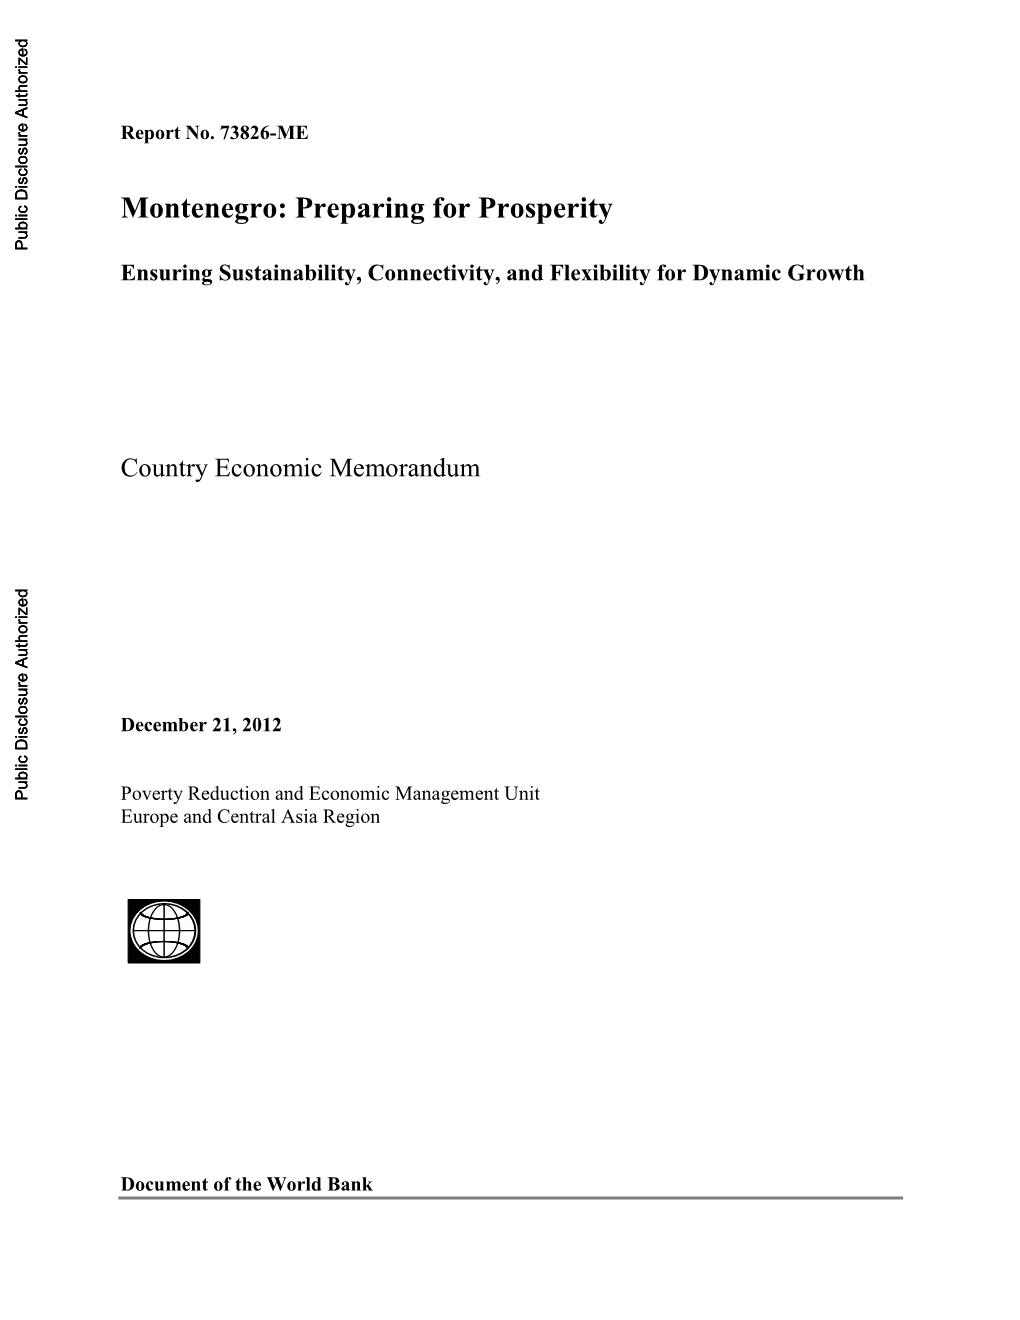 Montenegro: Preparing for Prosperity